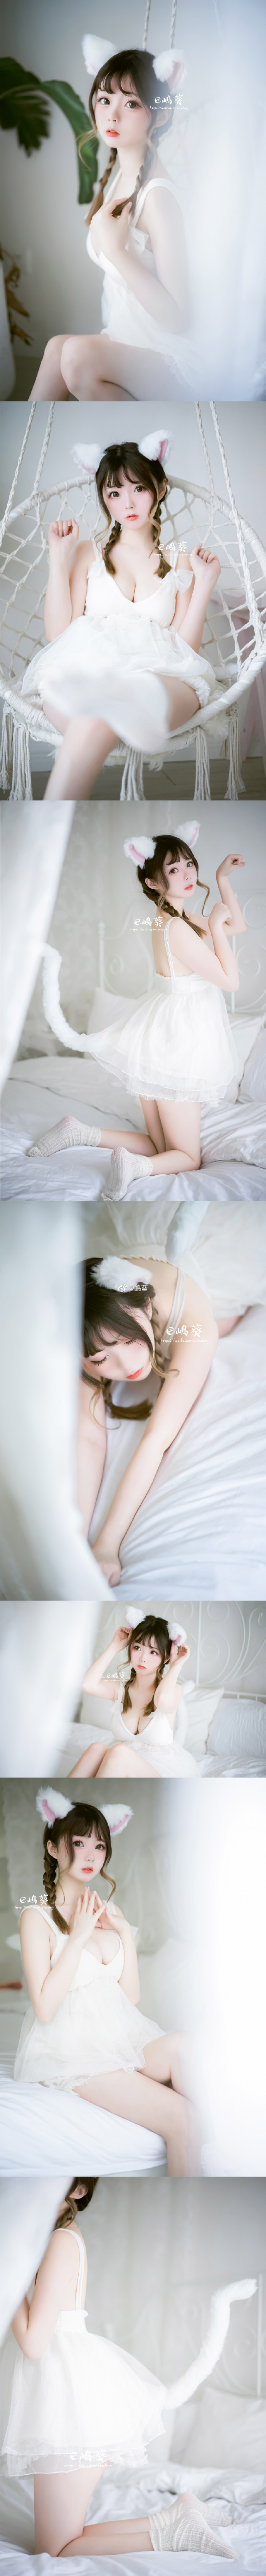 cos图片 嶋葵的甜美猫 想做你的猫想和你撒娇